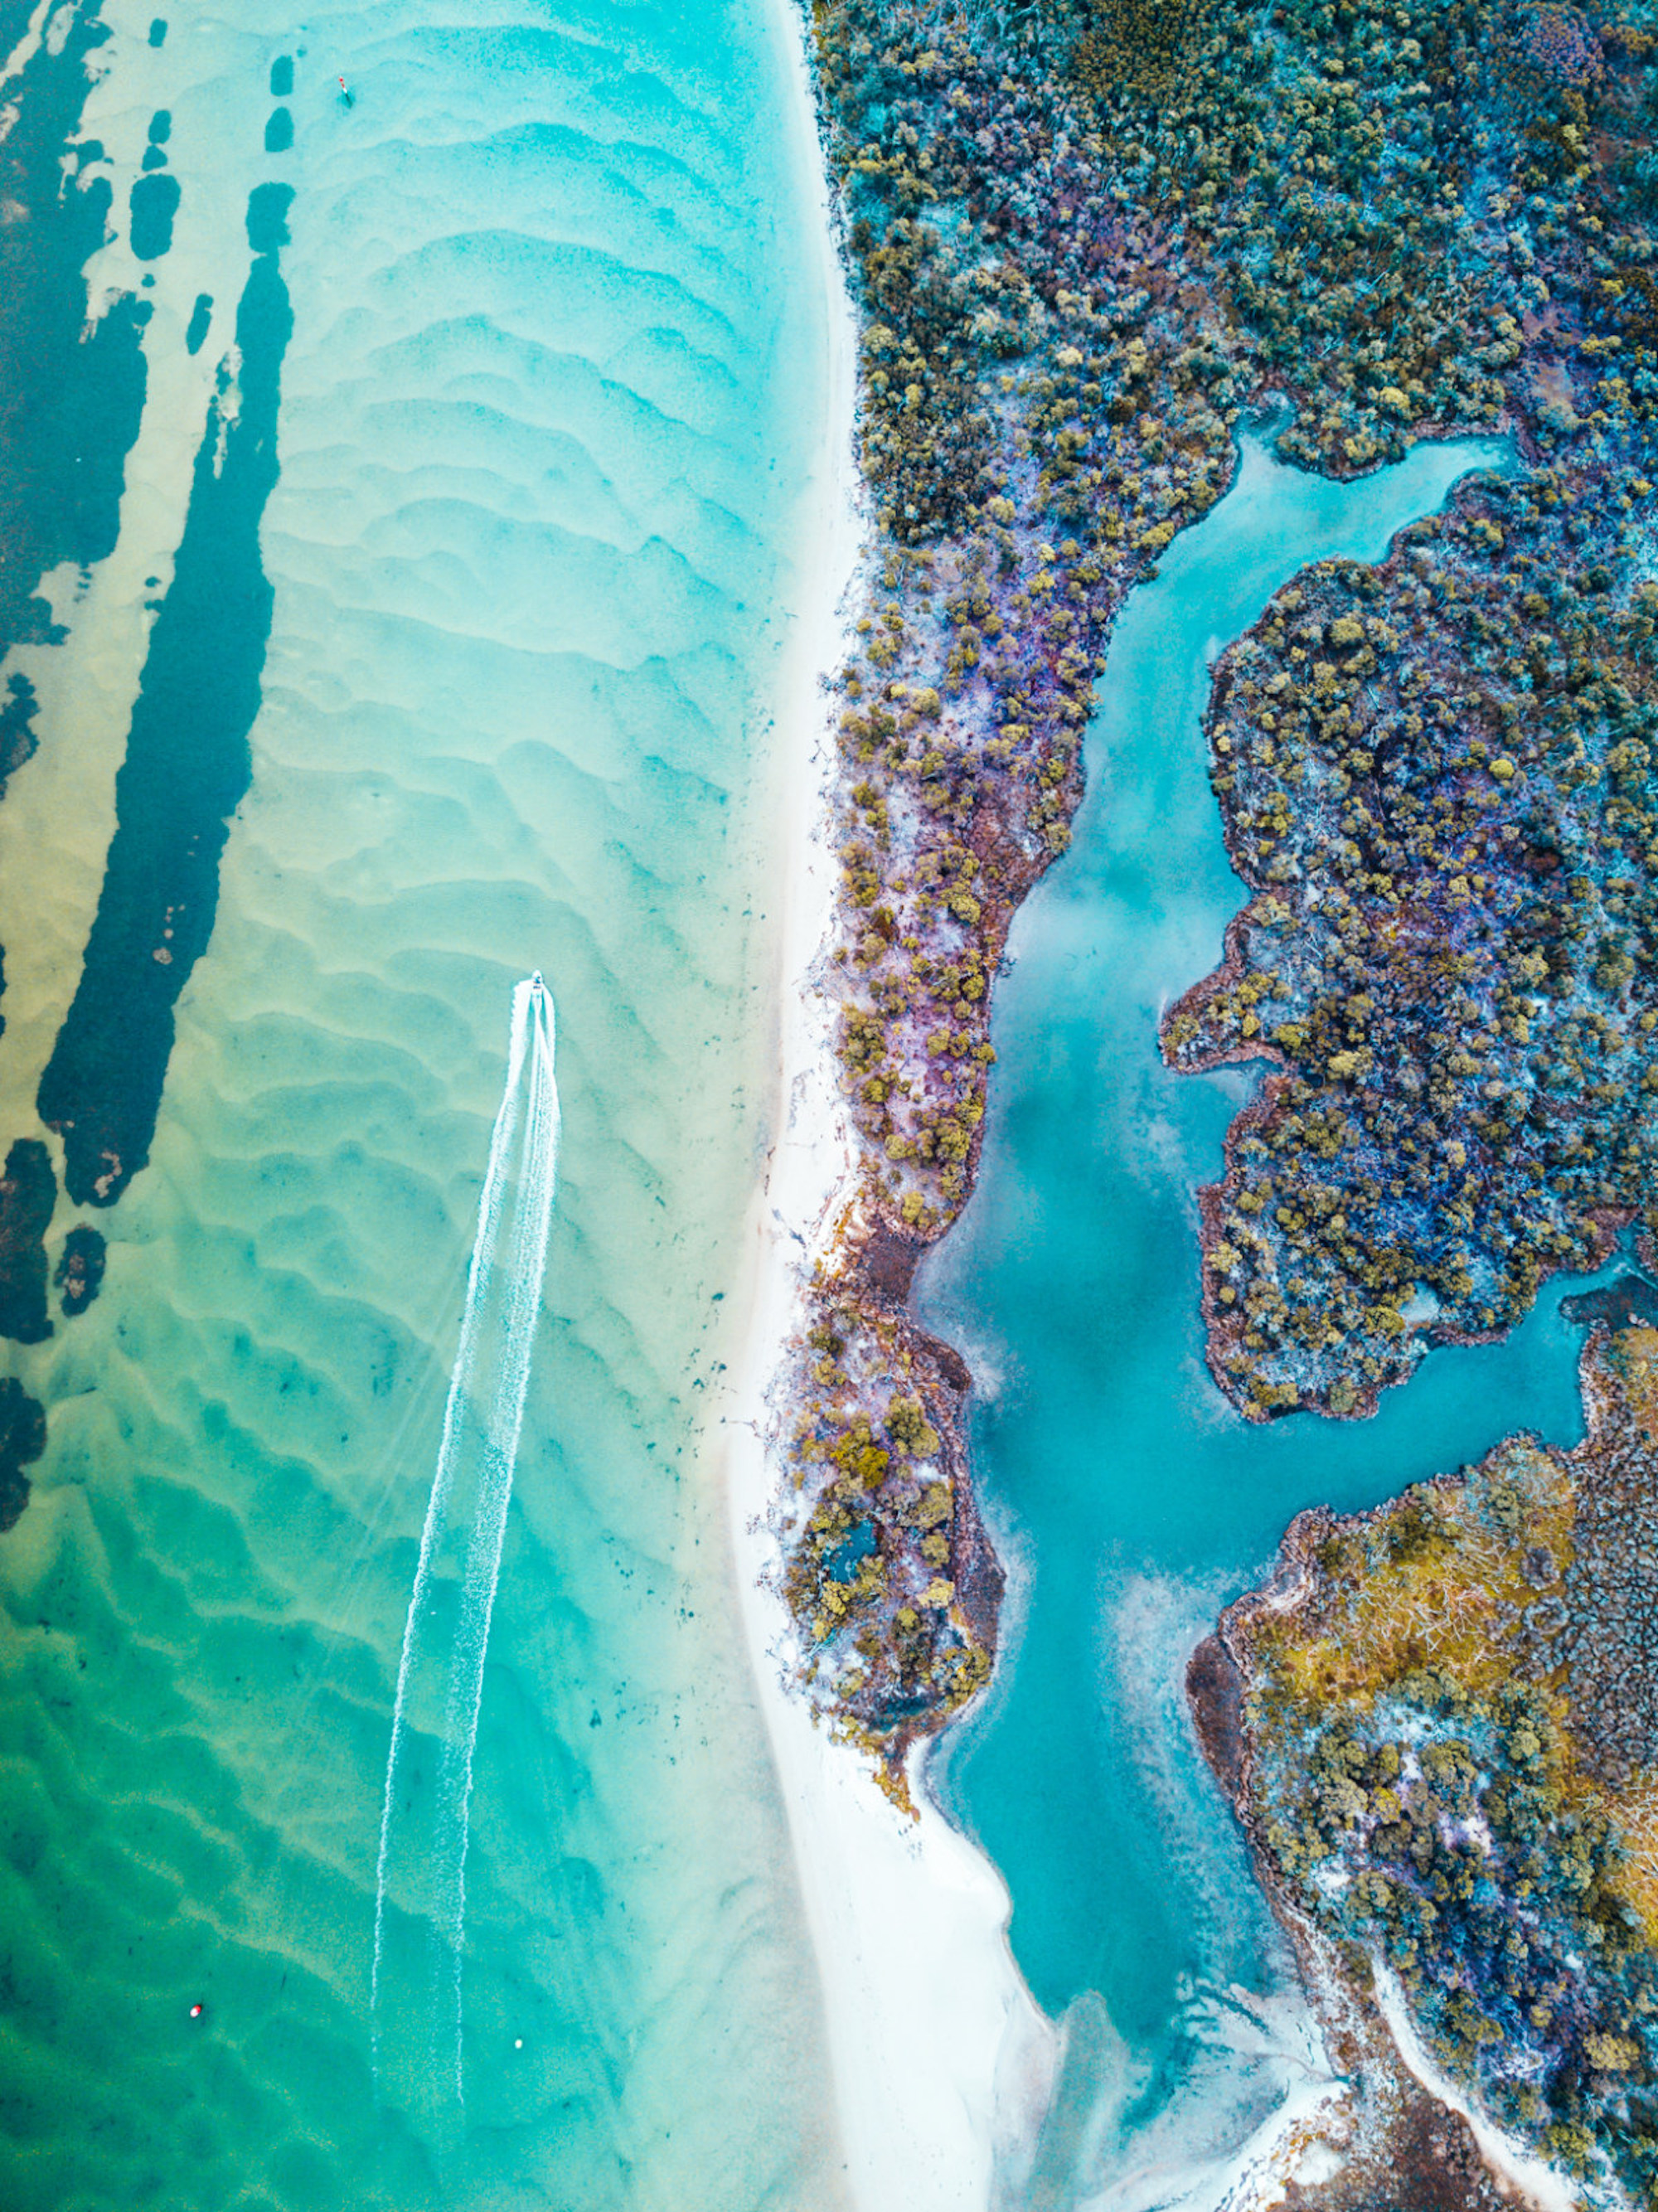 Drone Aerial photos highlight Australia's incredible beauty | CNN